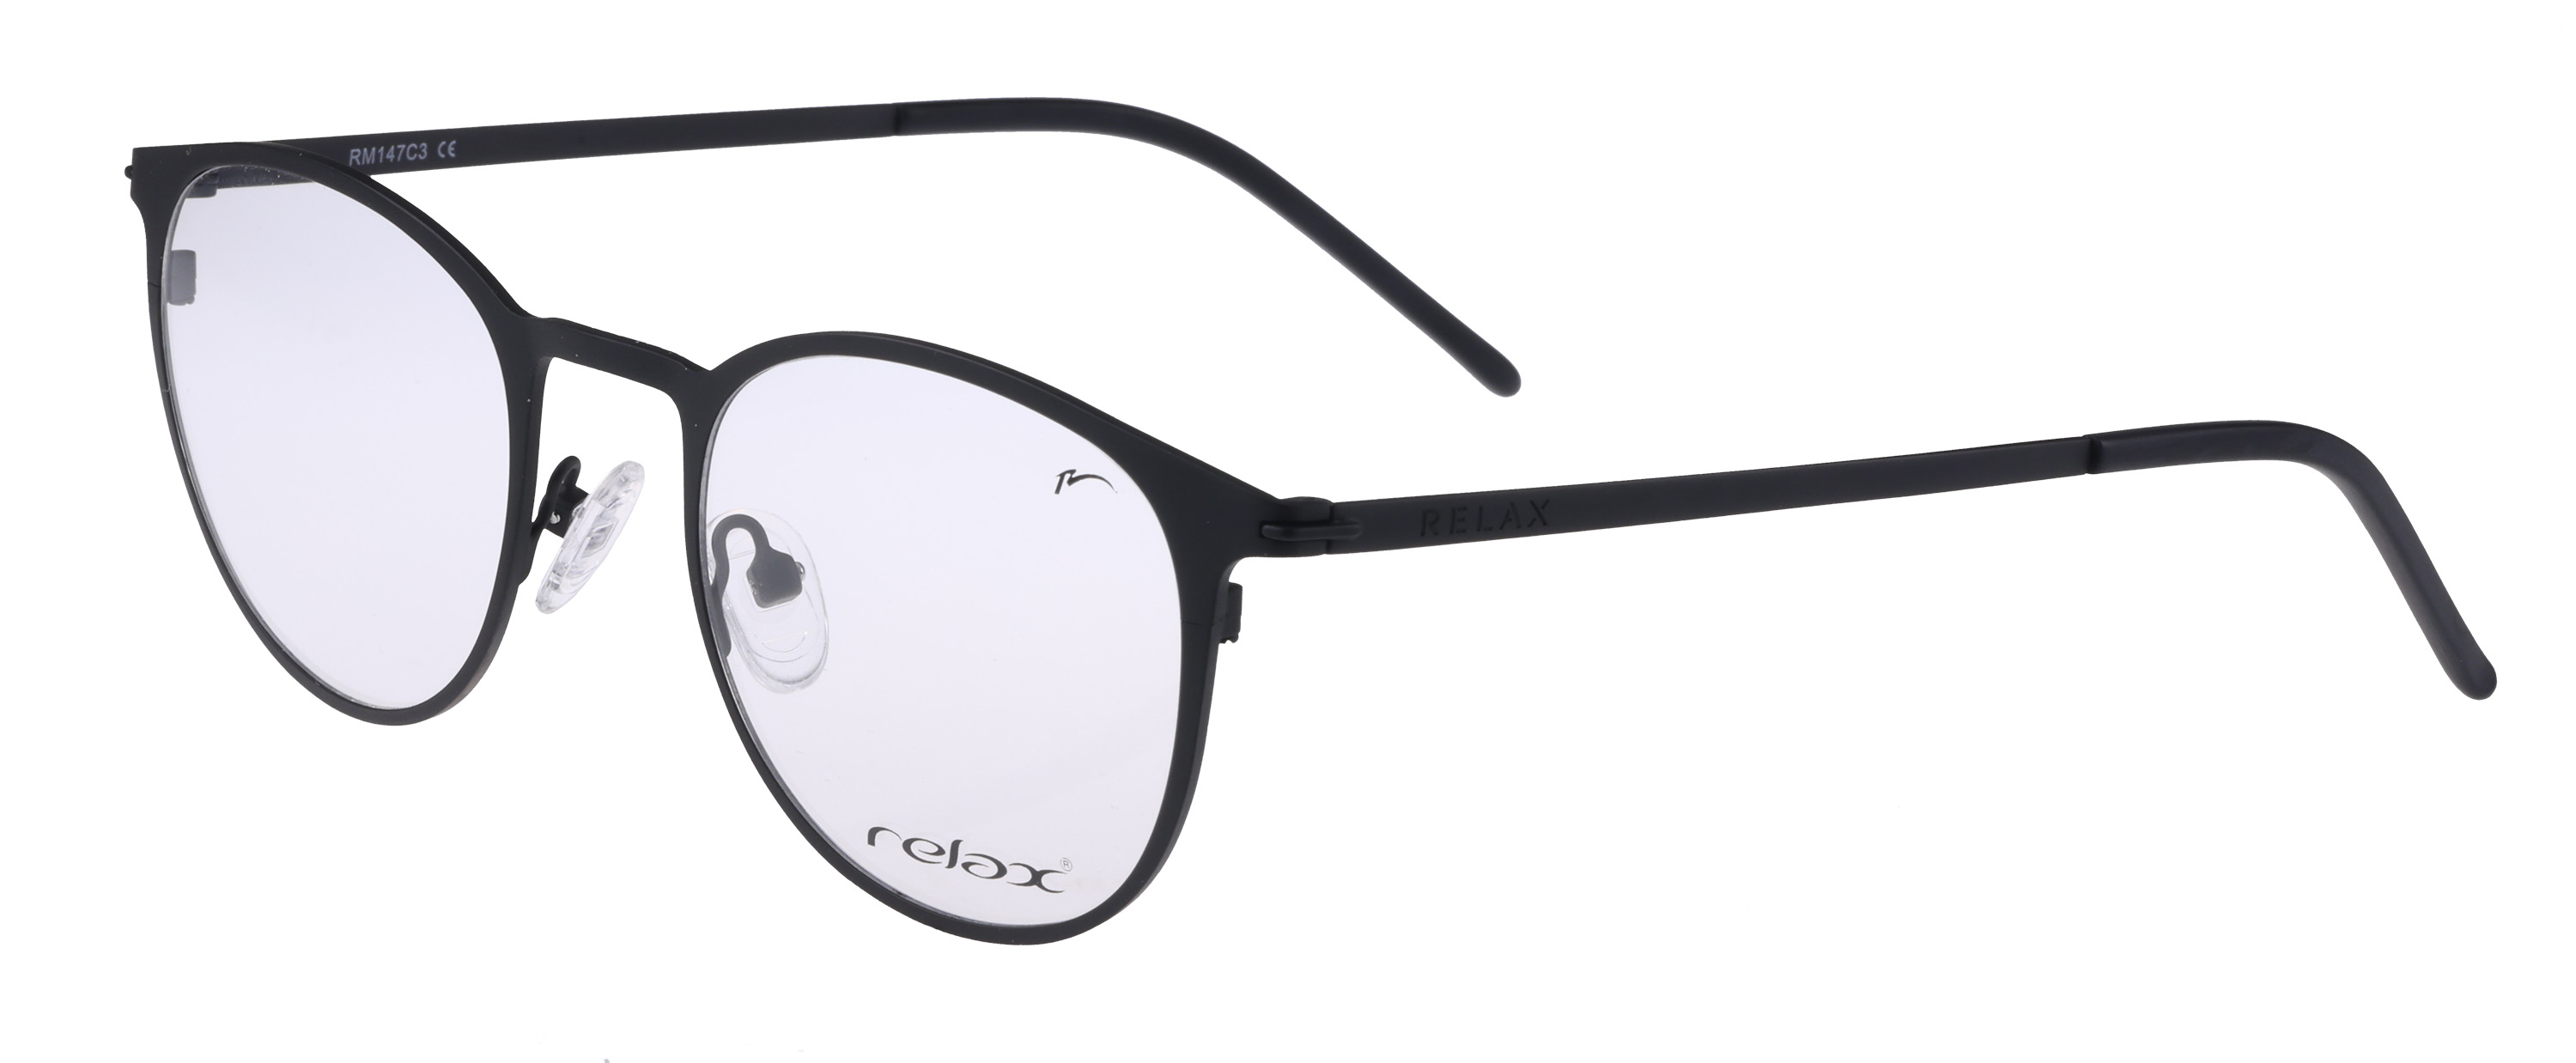 Dioptrické brýle Relax Pells RM147C3